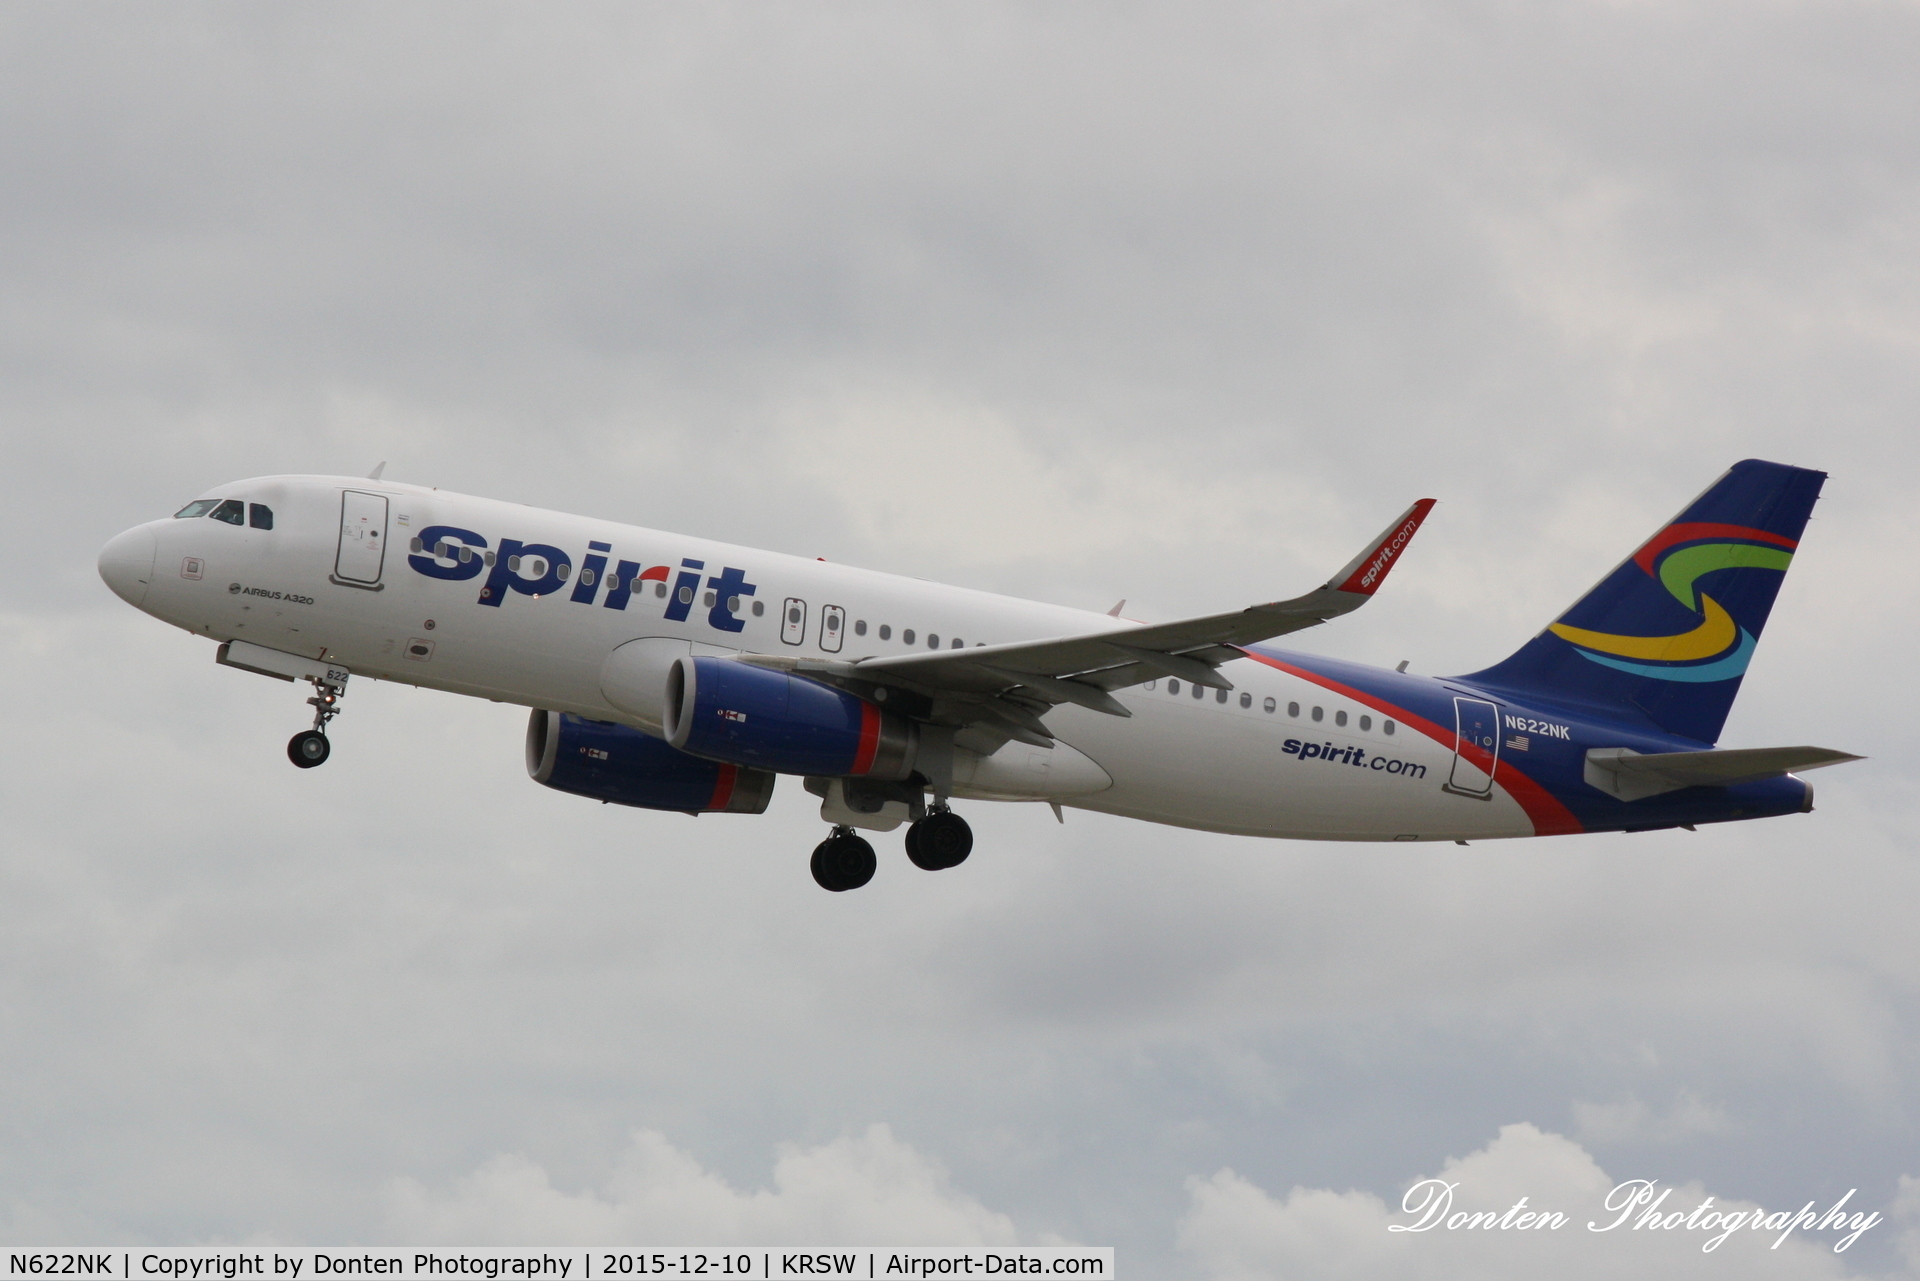 N622NK, 2013 Airbus A320-232 C/N 5804, Spirit Flight 431 (N622NK) departs Southwest Florida International Airport enroute to Dallas-Fort Worth International Airport